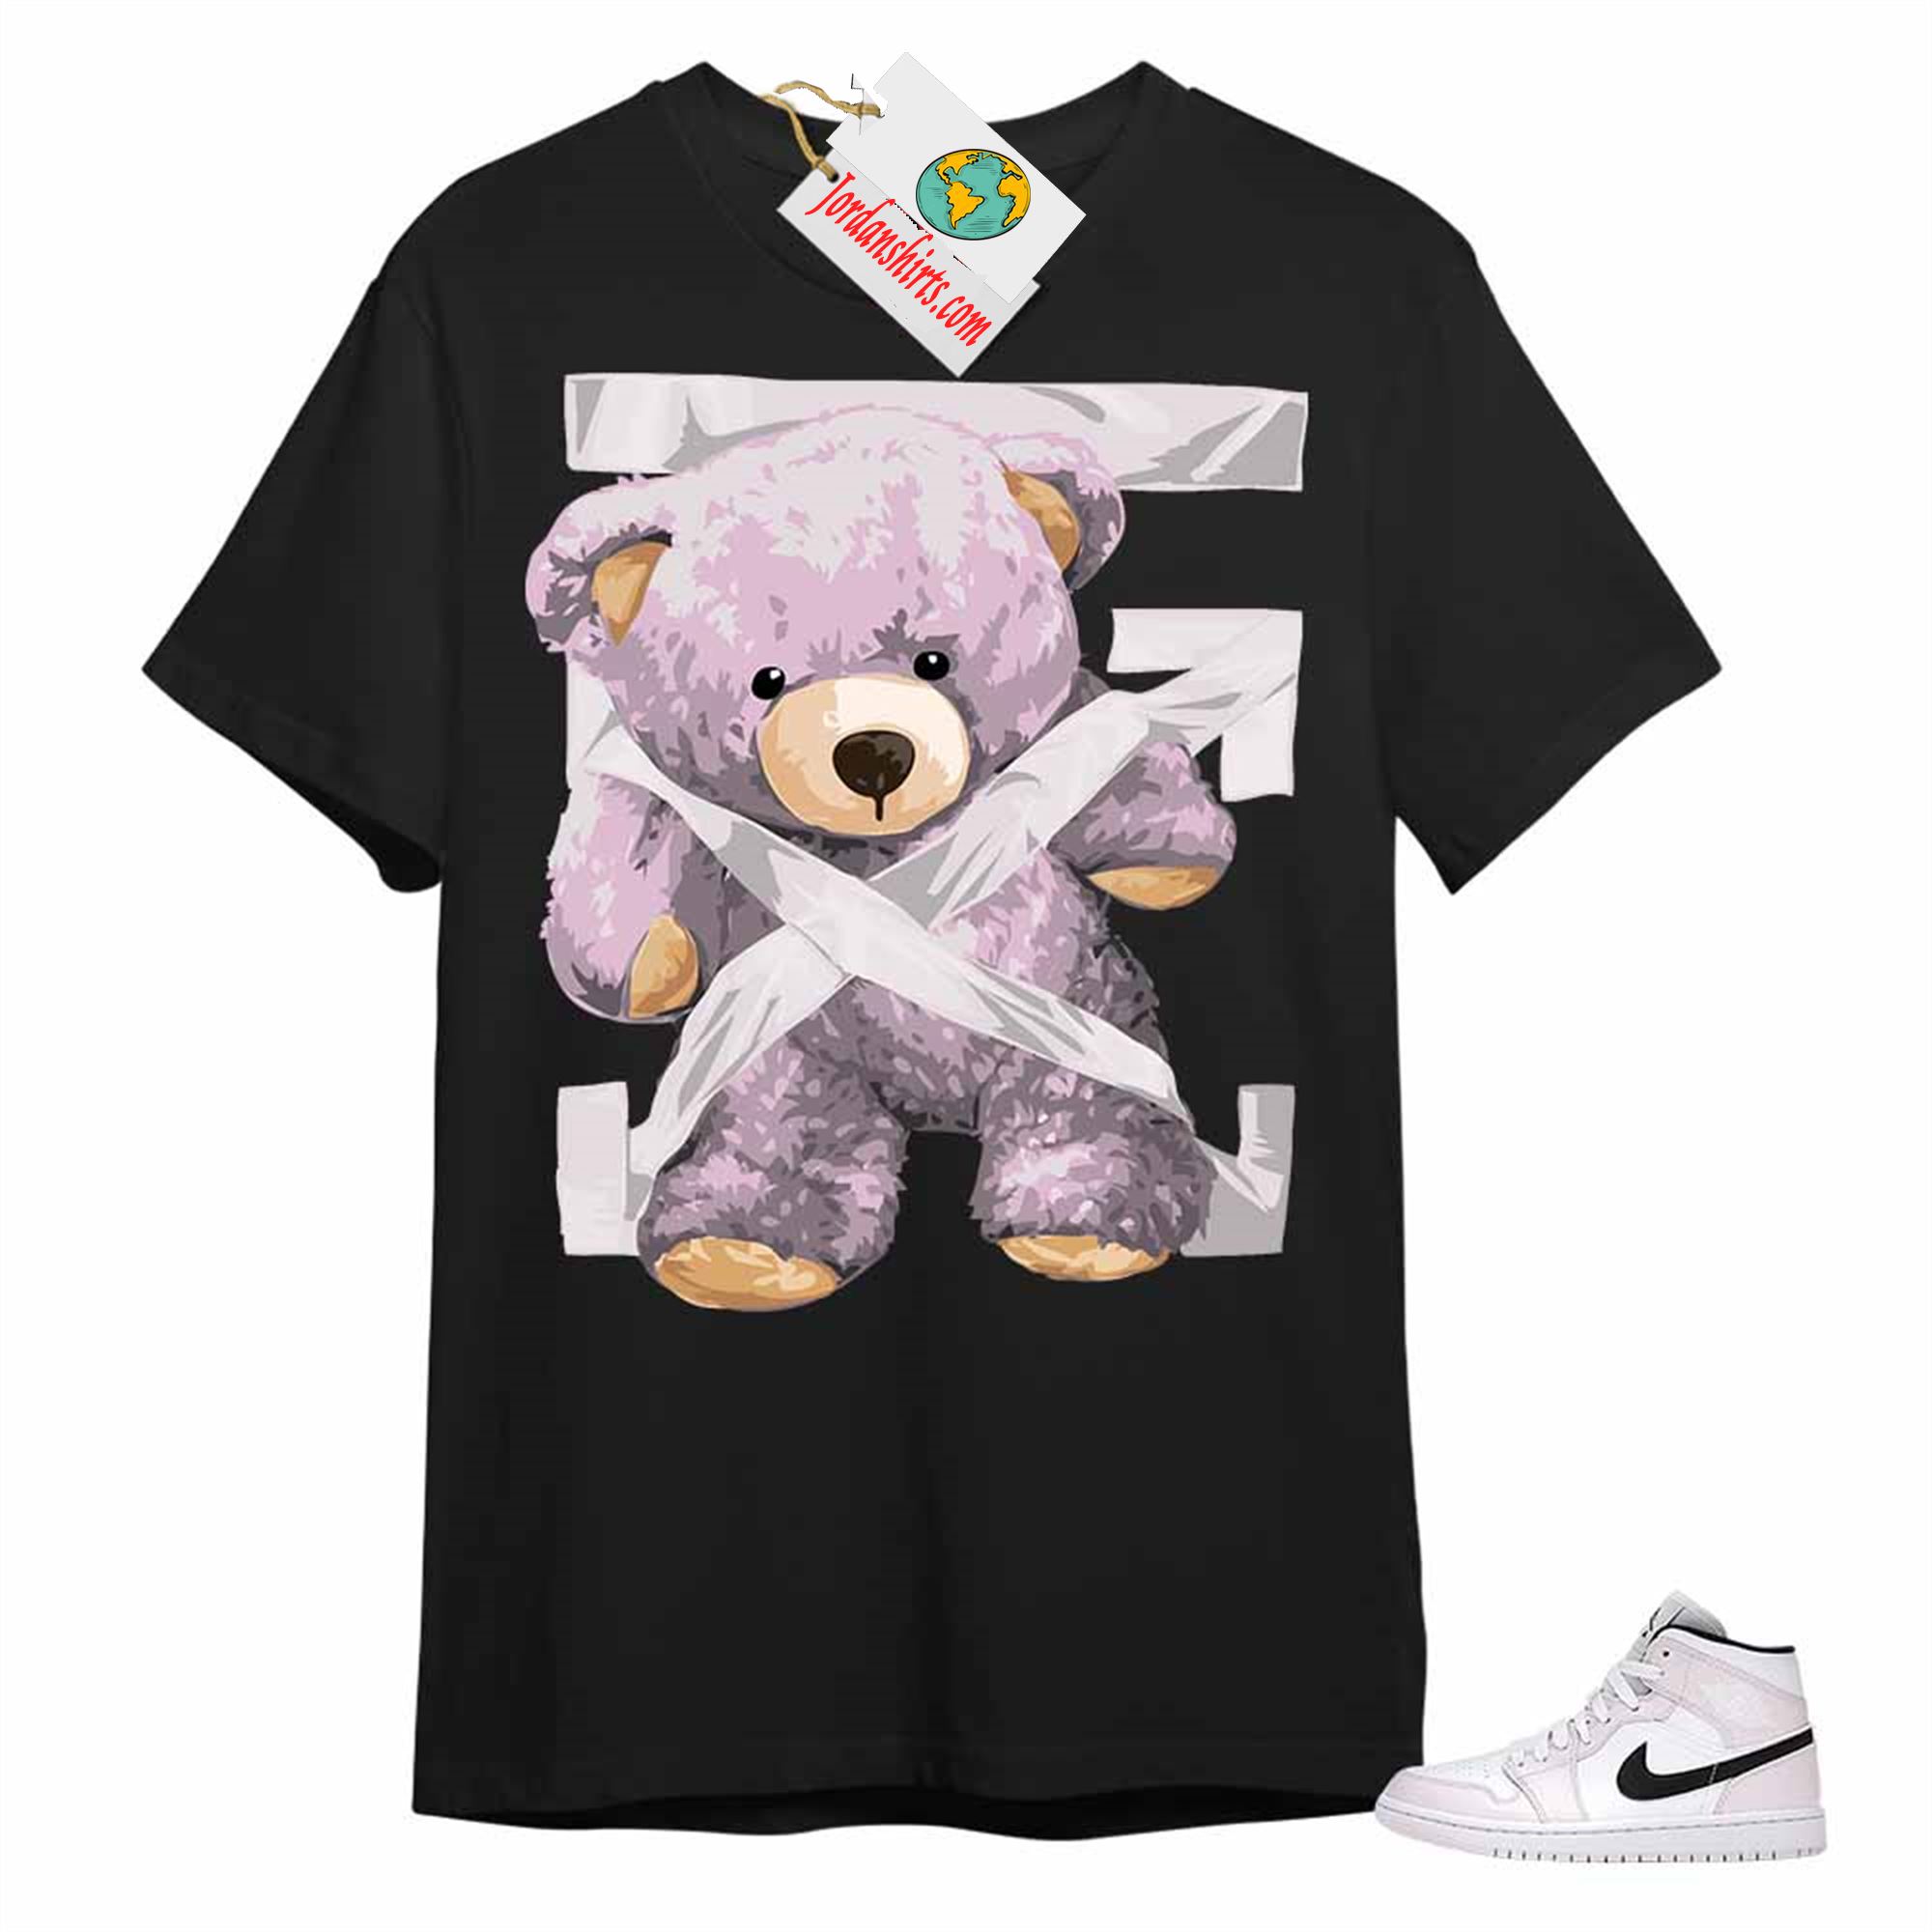 Jordan 1 Shirt, Teddy Bear Duck Tape Black T-shirt Air Jordan 1 Barely Rose 1s Full Size Up To 5xl